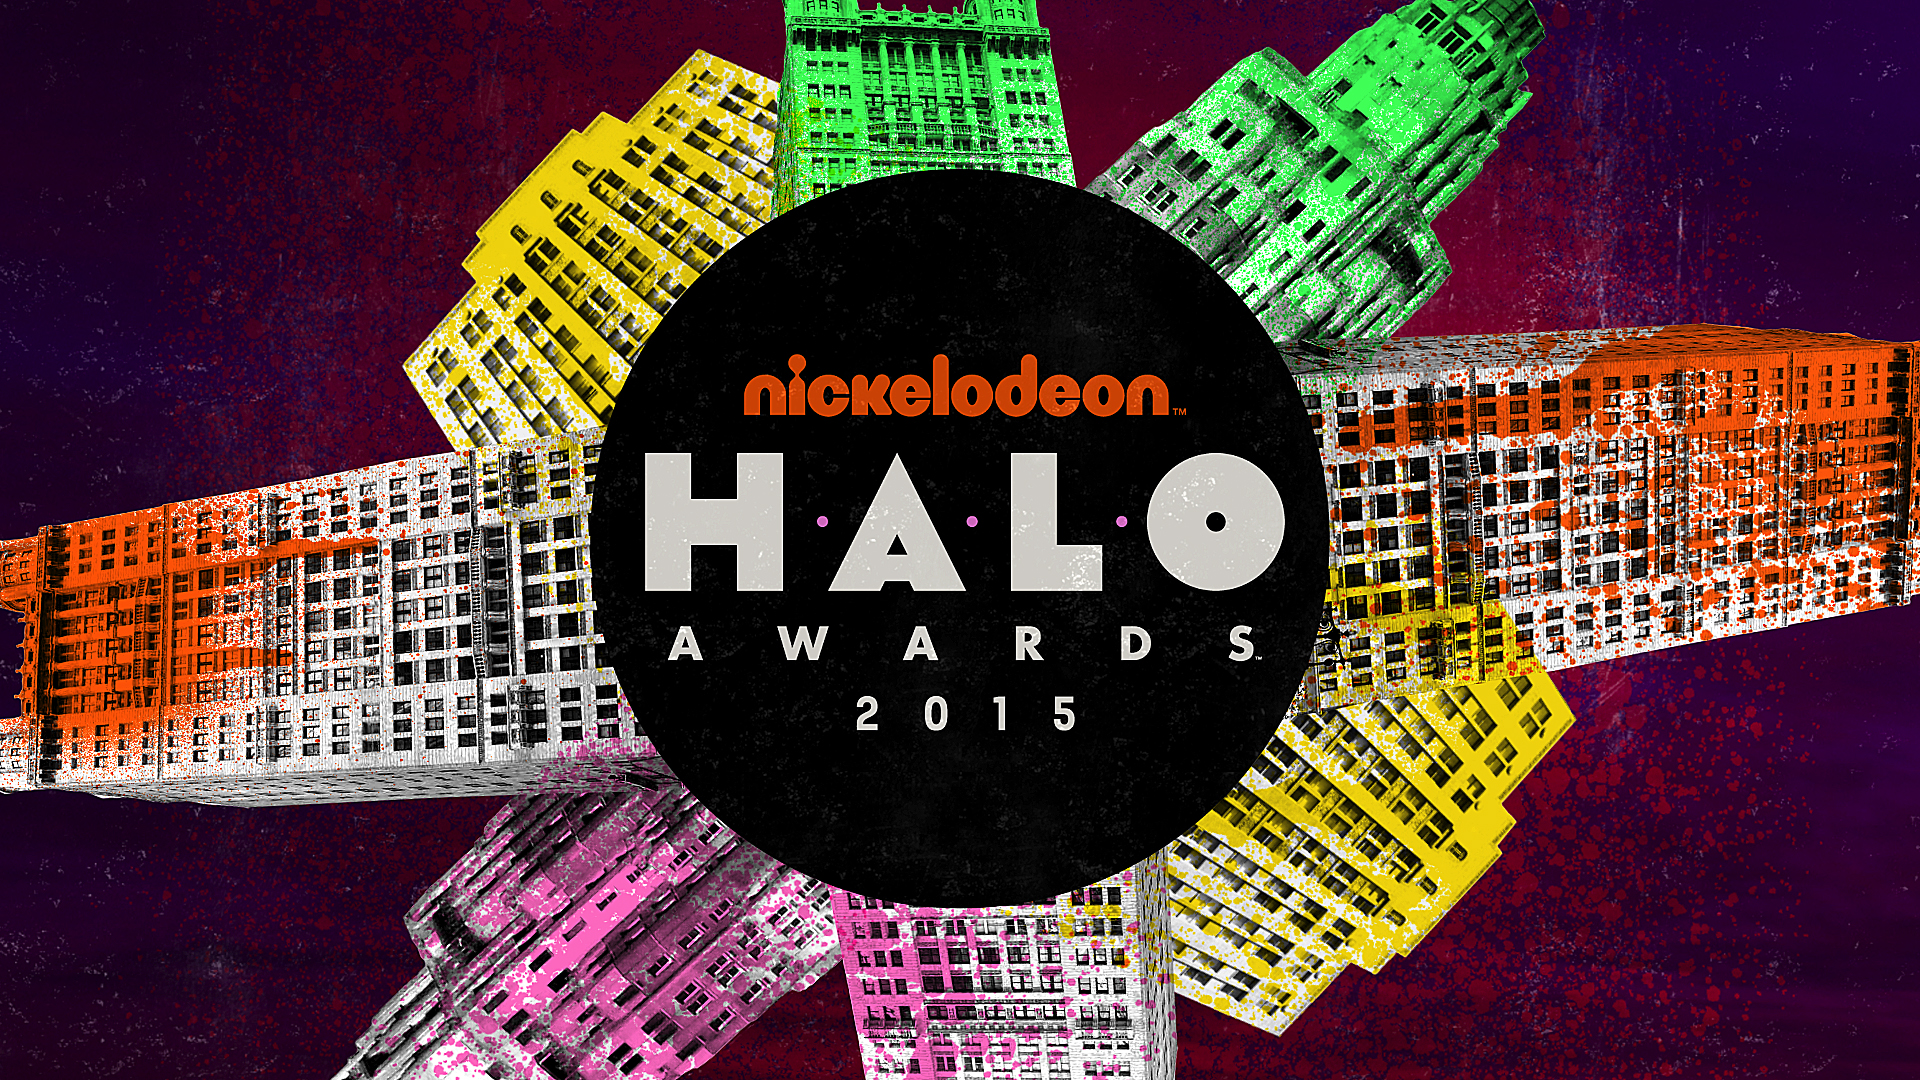 20_Nickelodeon Halo Awards 2015.jpg